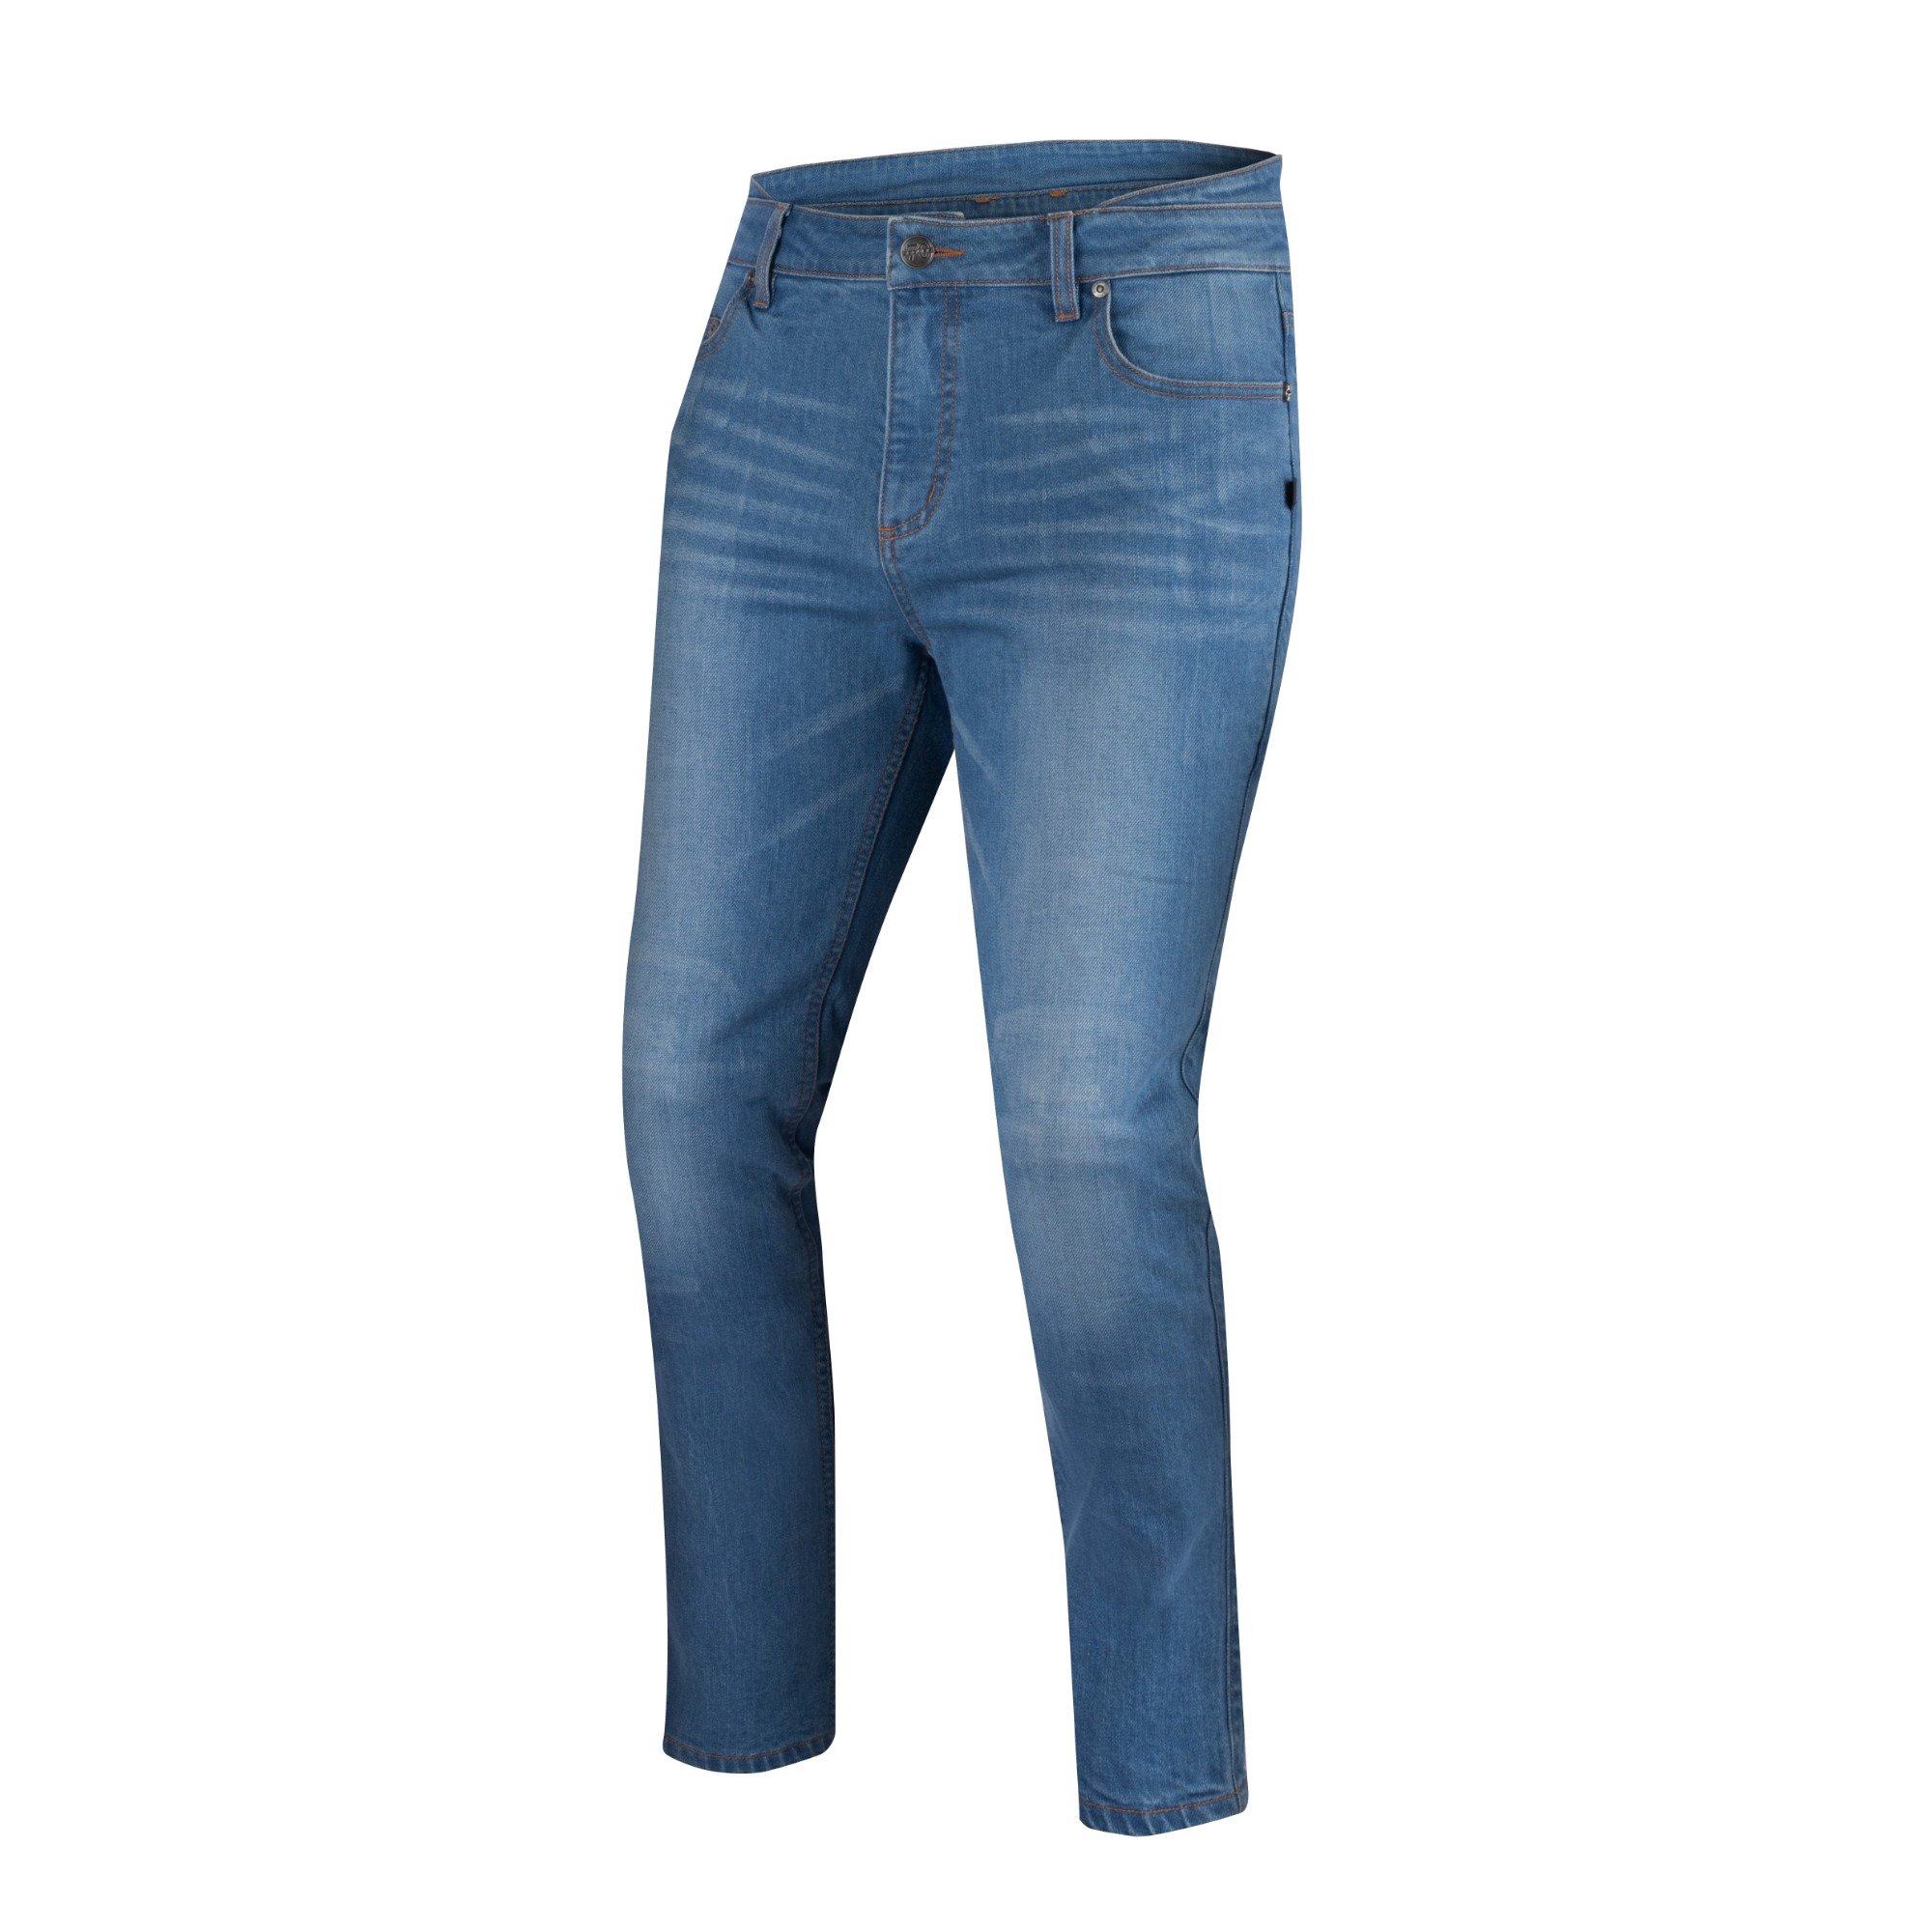 Image of Segura Trousers Rosco Blue Size 4XL ID 3660815168059